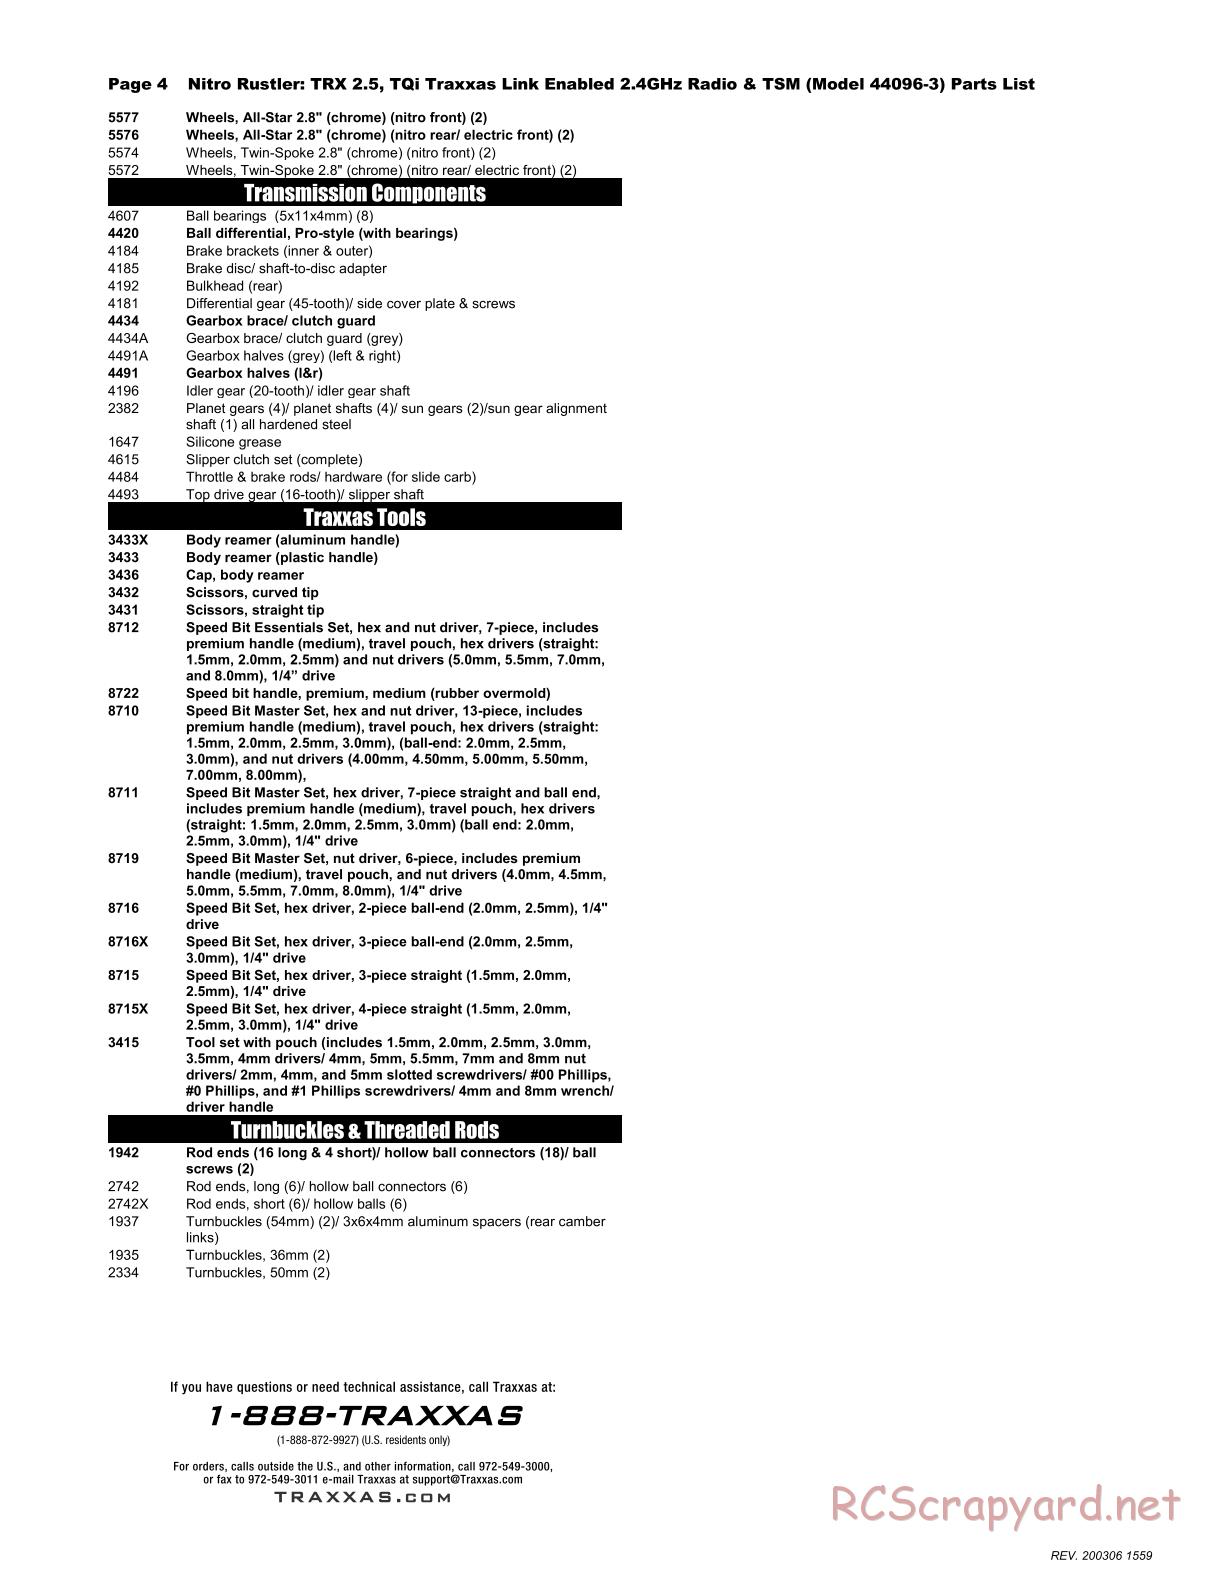 Traxxas - Nitro Rustler TSM (2016) - Parts List - Page 4